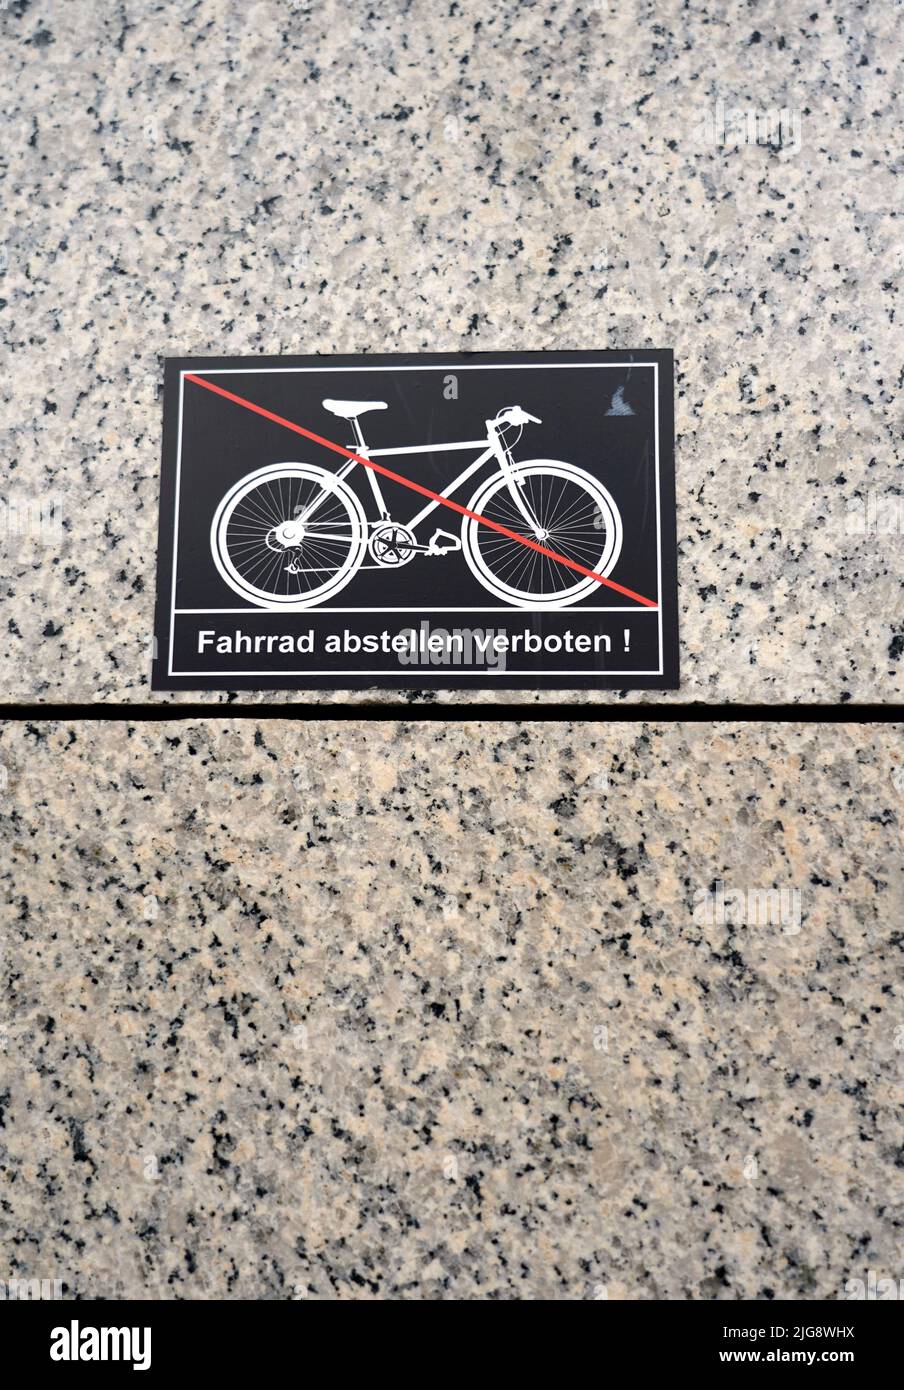 Cartel PVC 40x30 Prohibido el paso con bicicleta